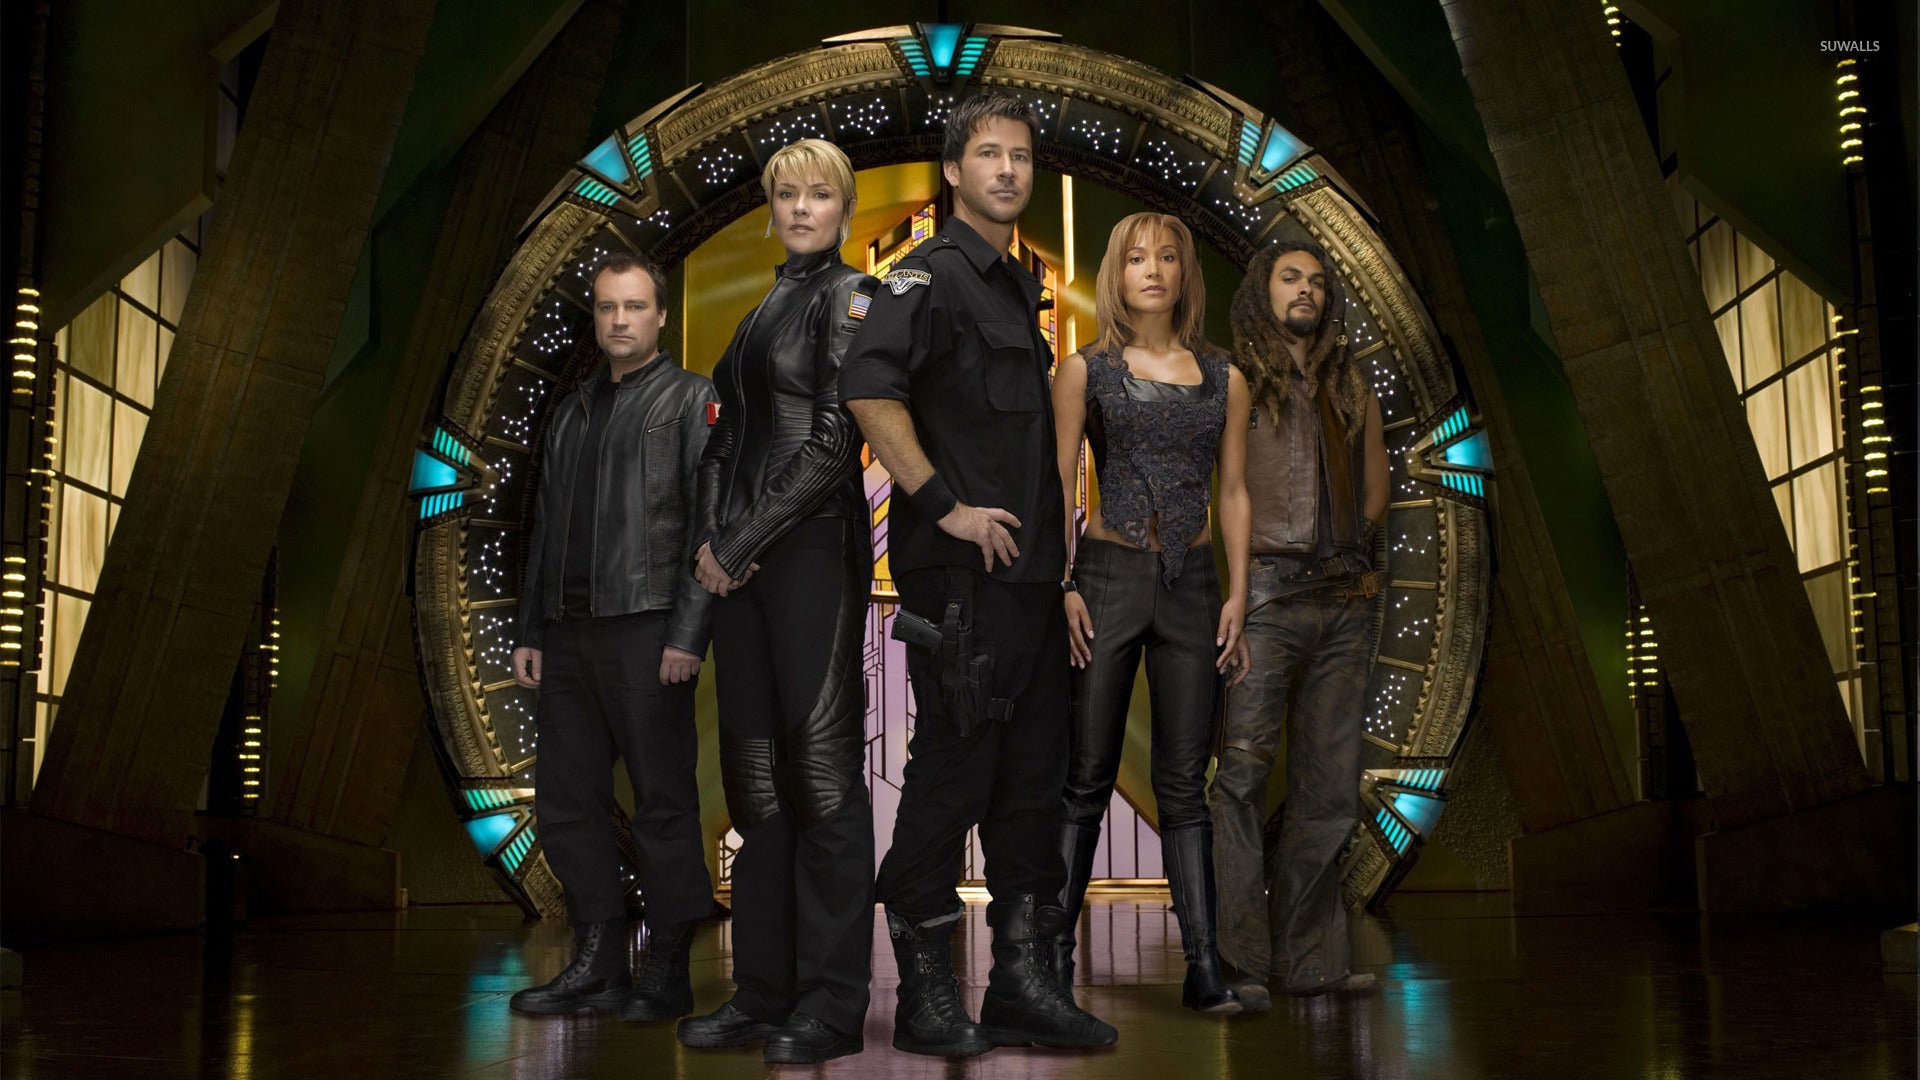 Stargate Atlantis: The Complete Series